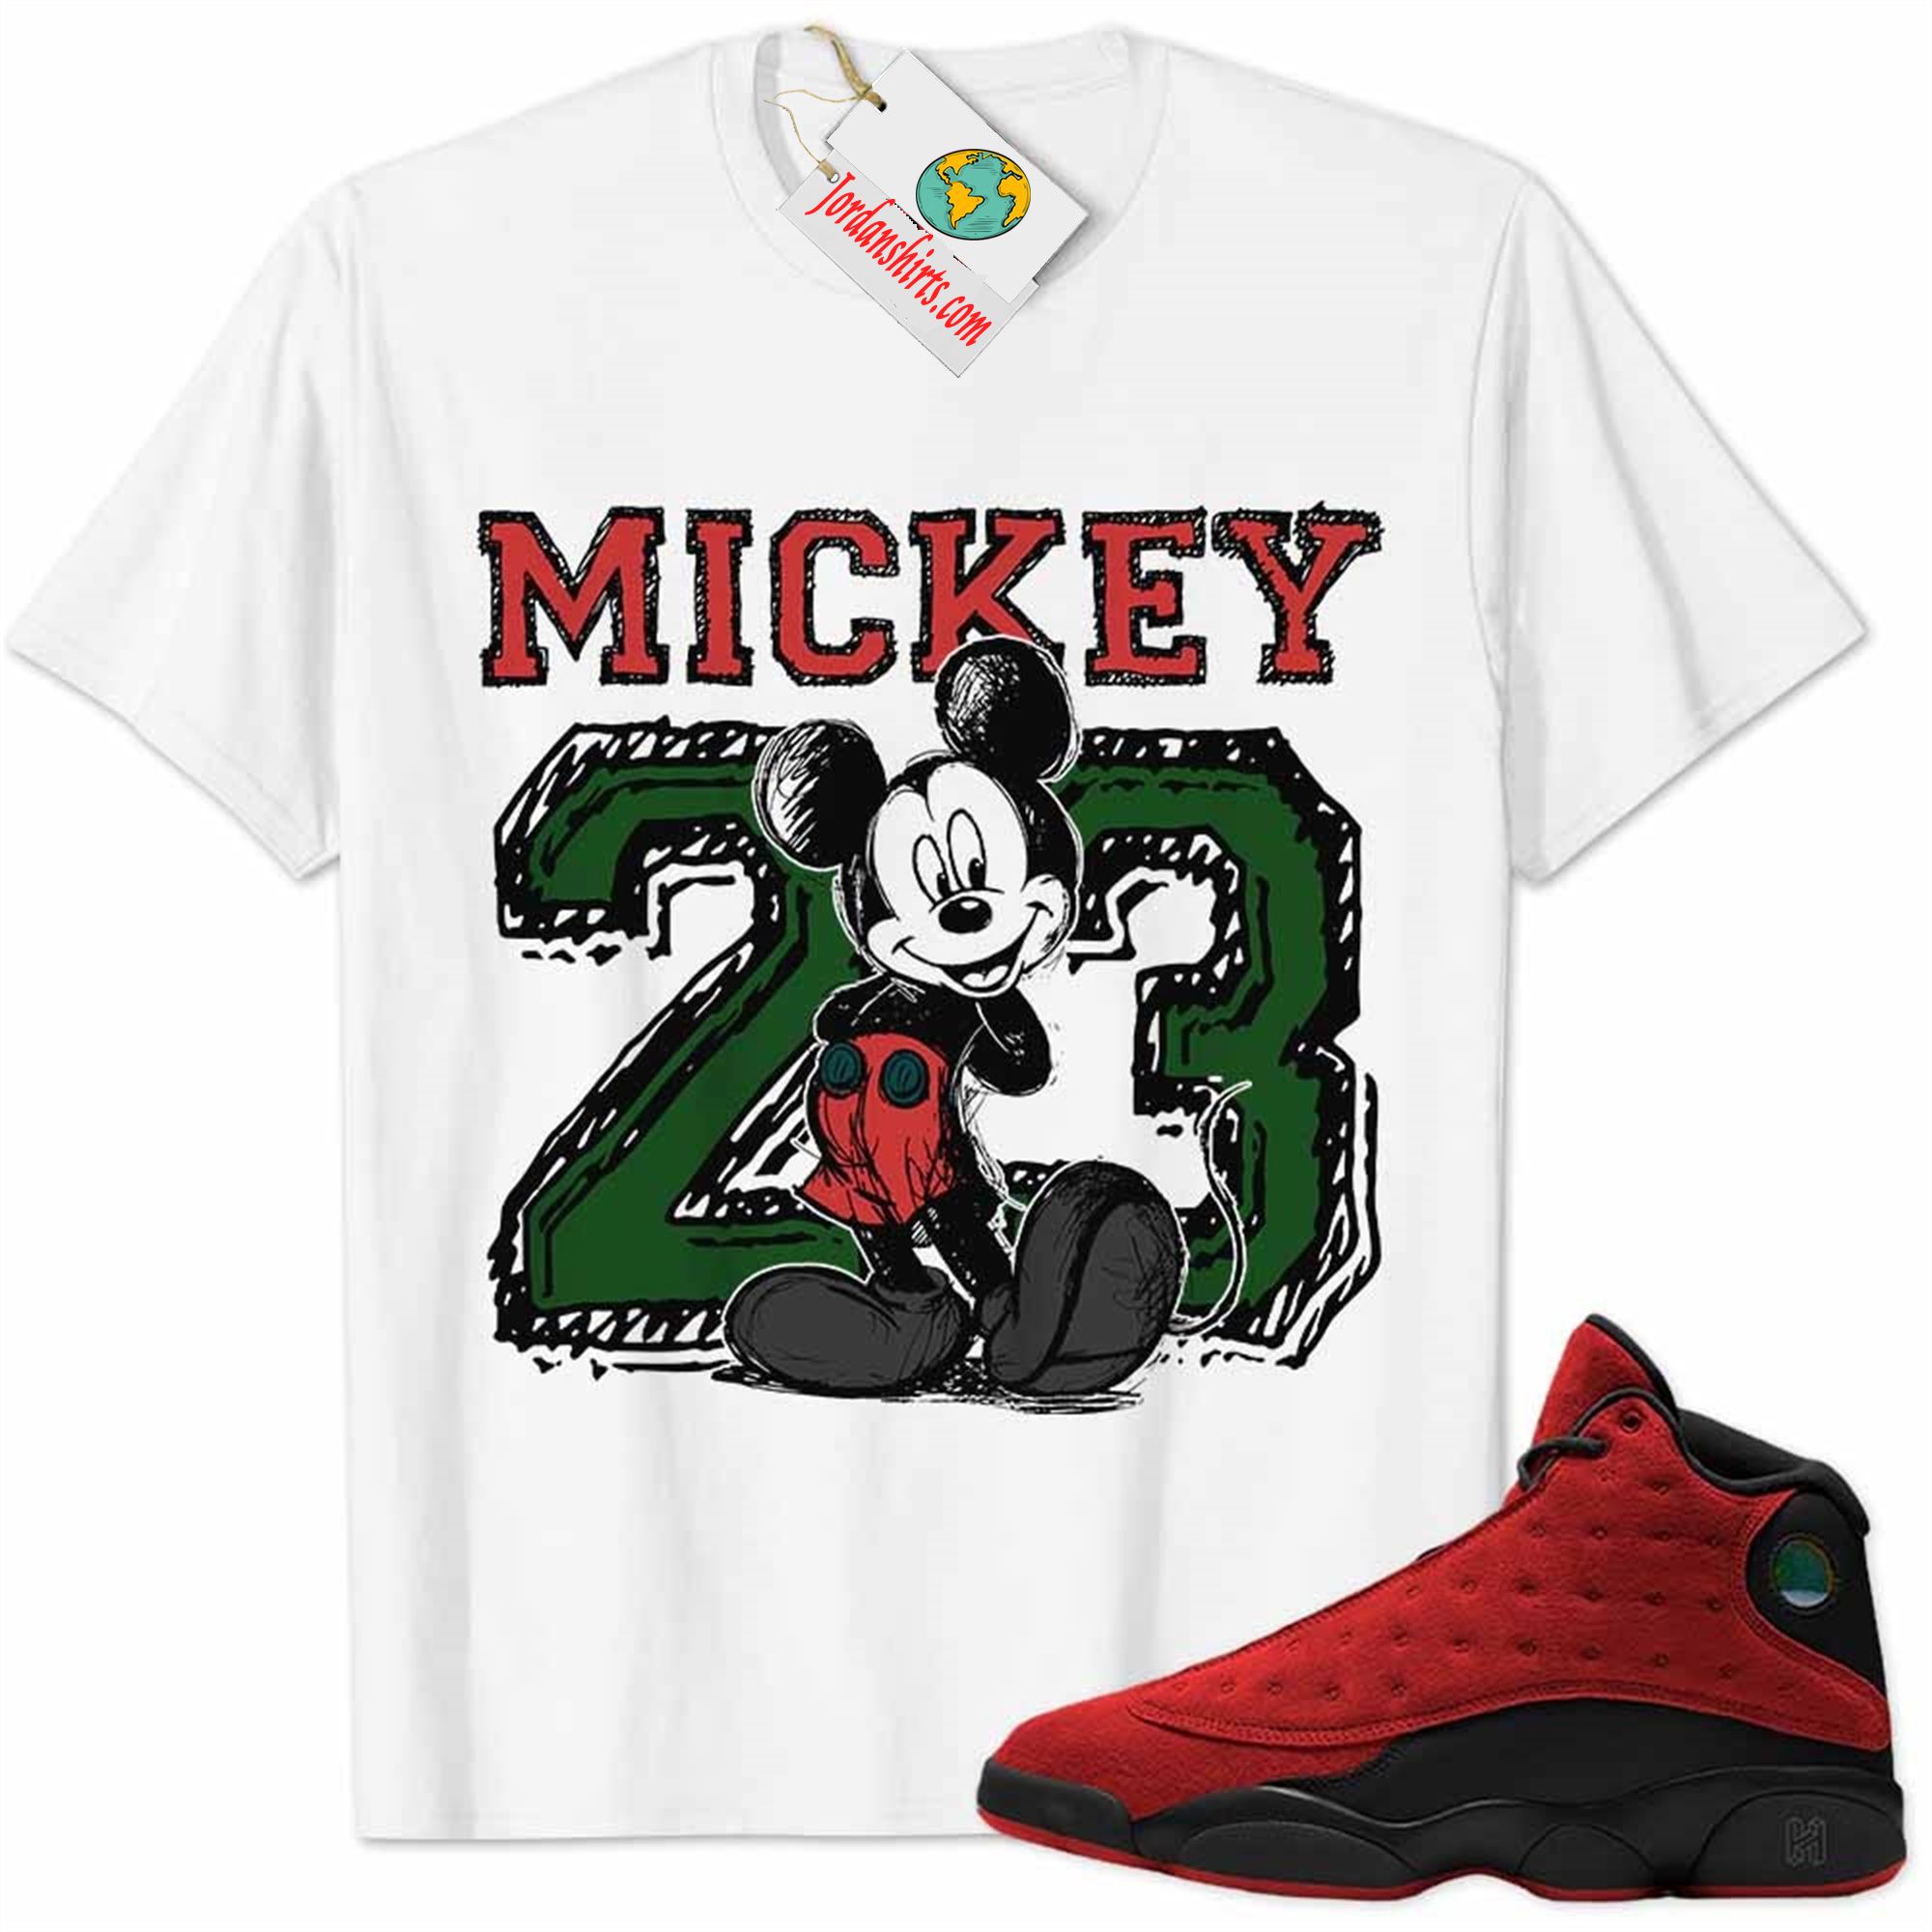 Jordan 13 Shirt, Reverse Bred 13s Shirt Mickey 23 Michael Jordan Number Draw White Plus Size Up To 5xl